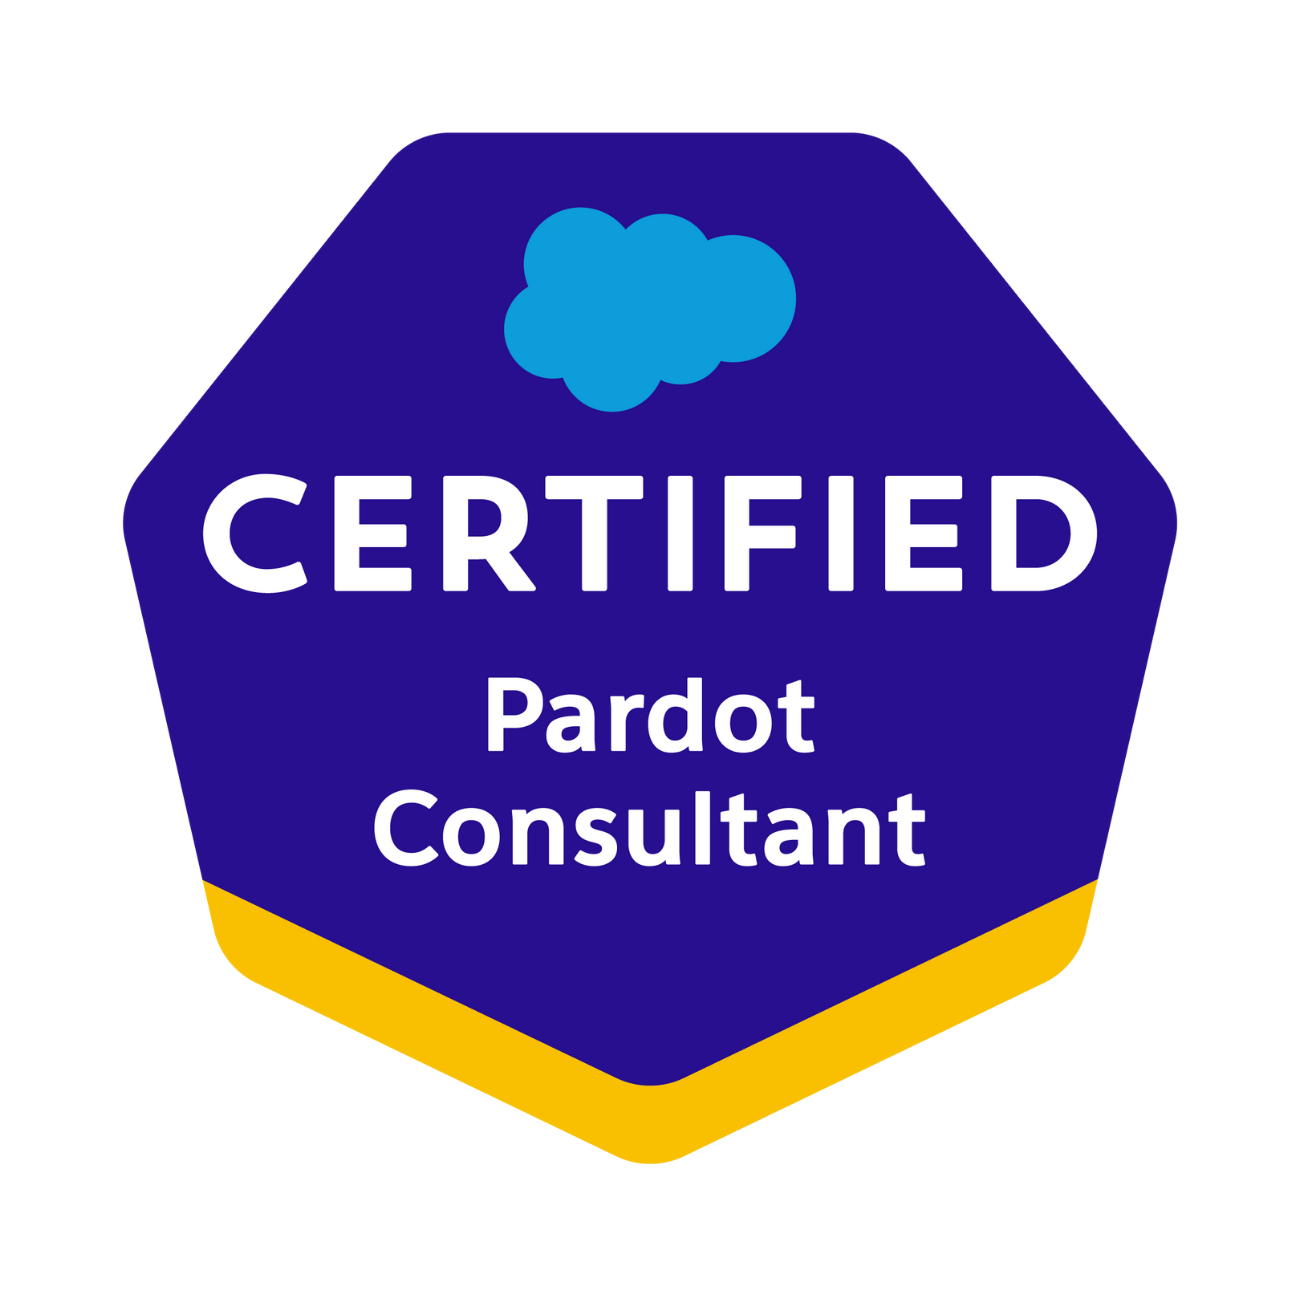 Certified Pardot Consultant badge